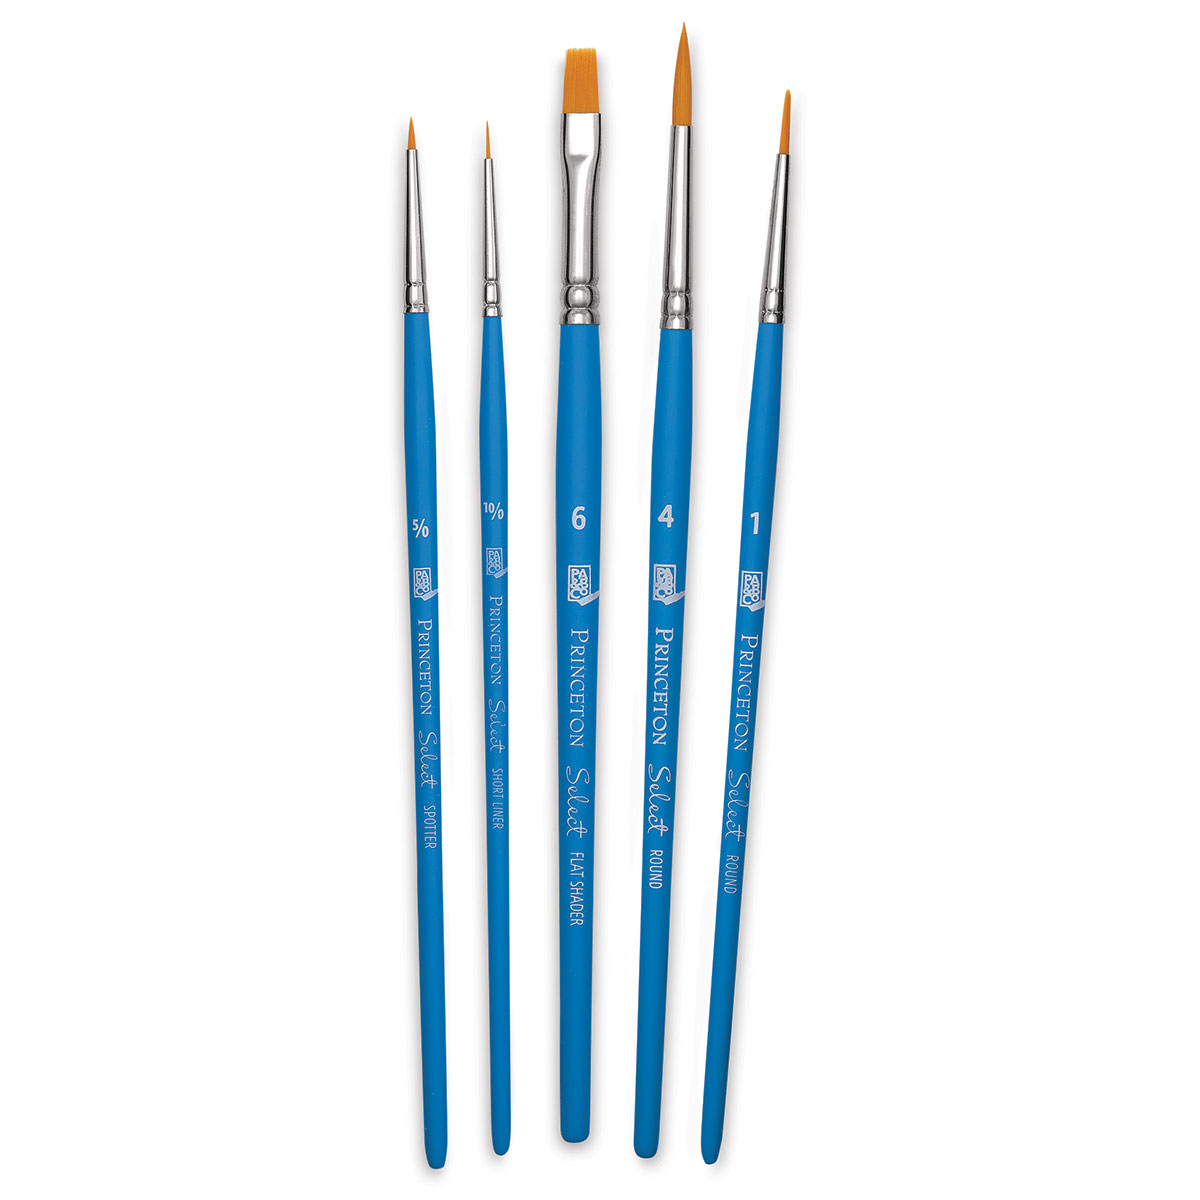 Princeton Select Value Series 3750 Brush Sets